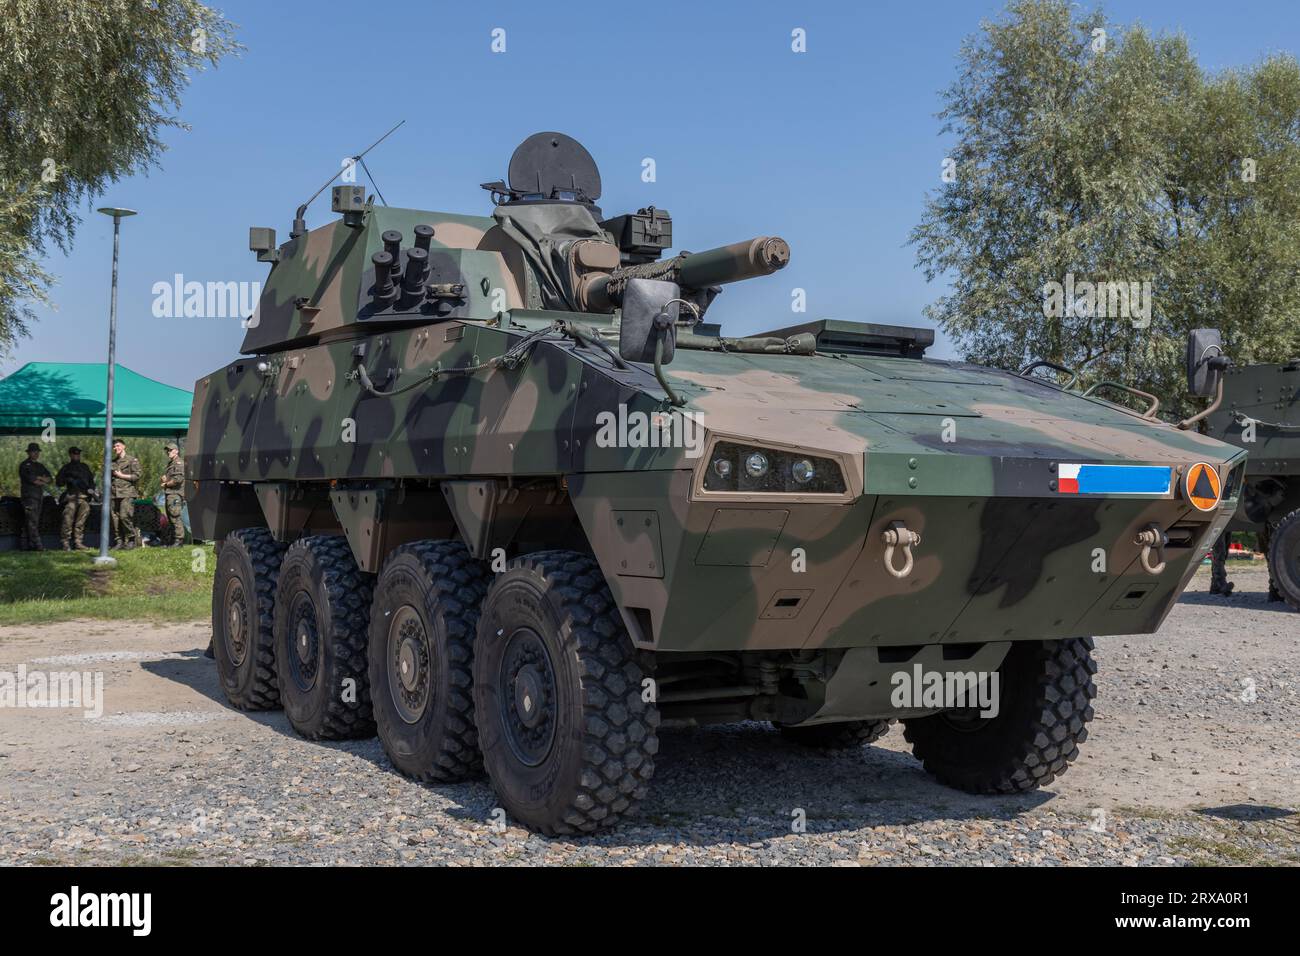 Polish artillery systems. Combat vehicle - Rak self-propelled mortar. Public presentation of Polish weapon systems, Polish Army, Poland Stock Photo